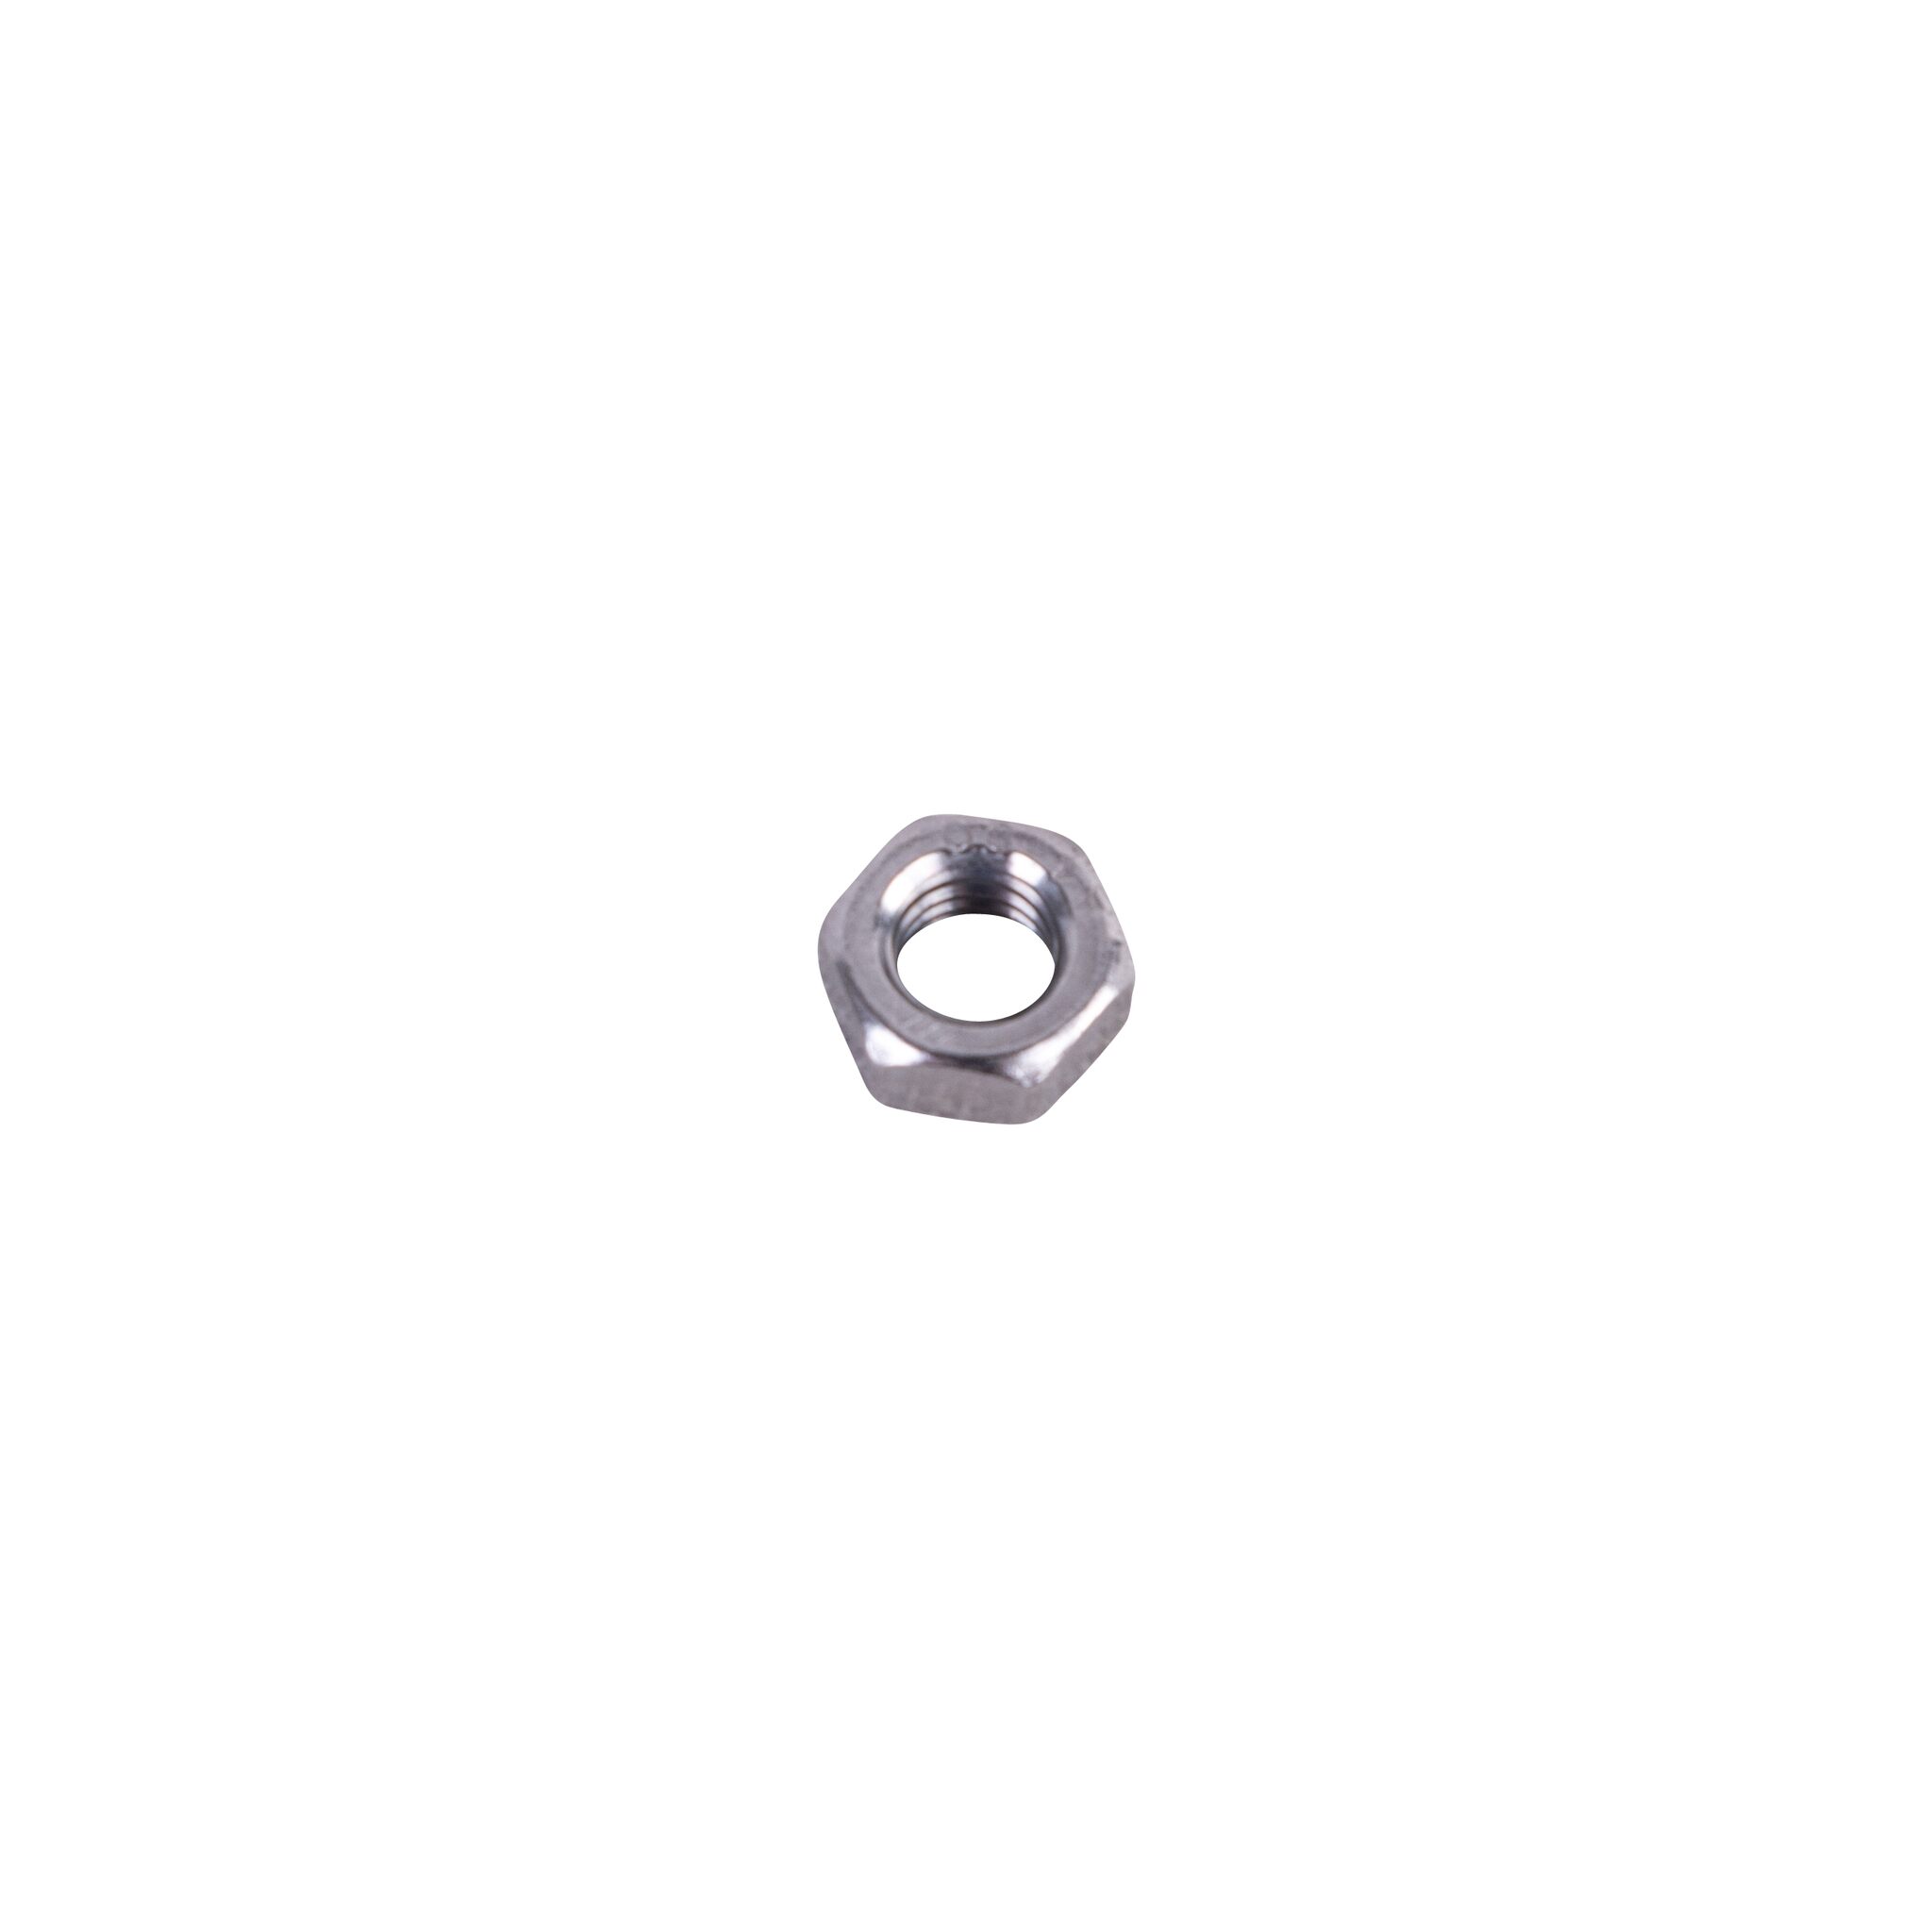 Hexagon nut (DIN 934-A4)